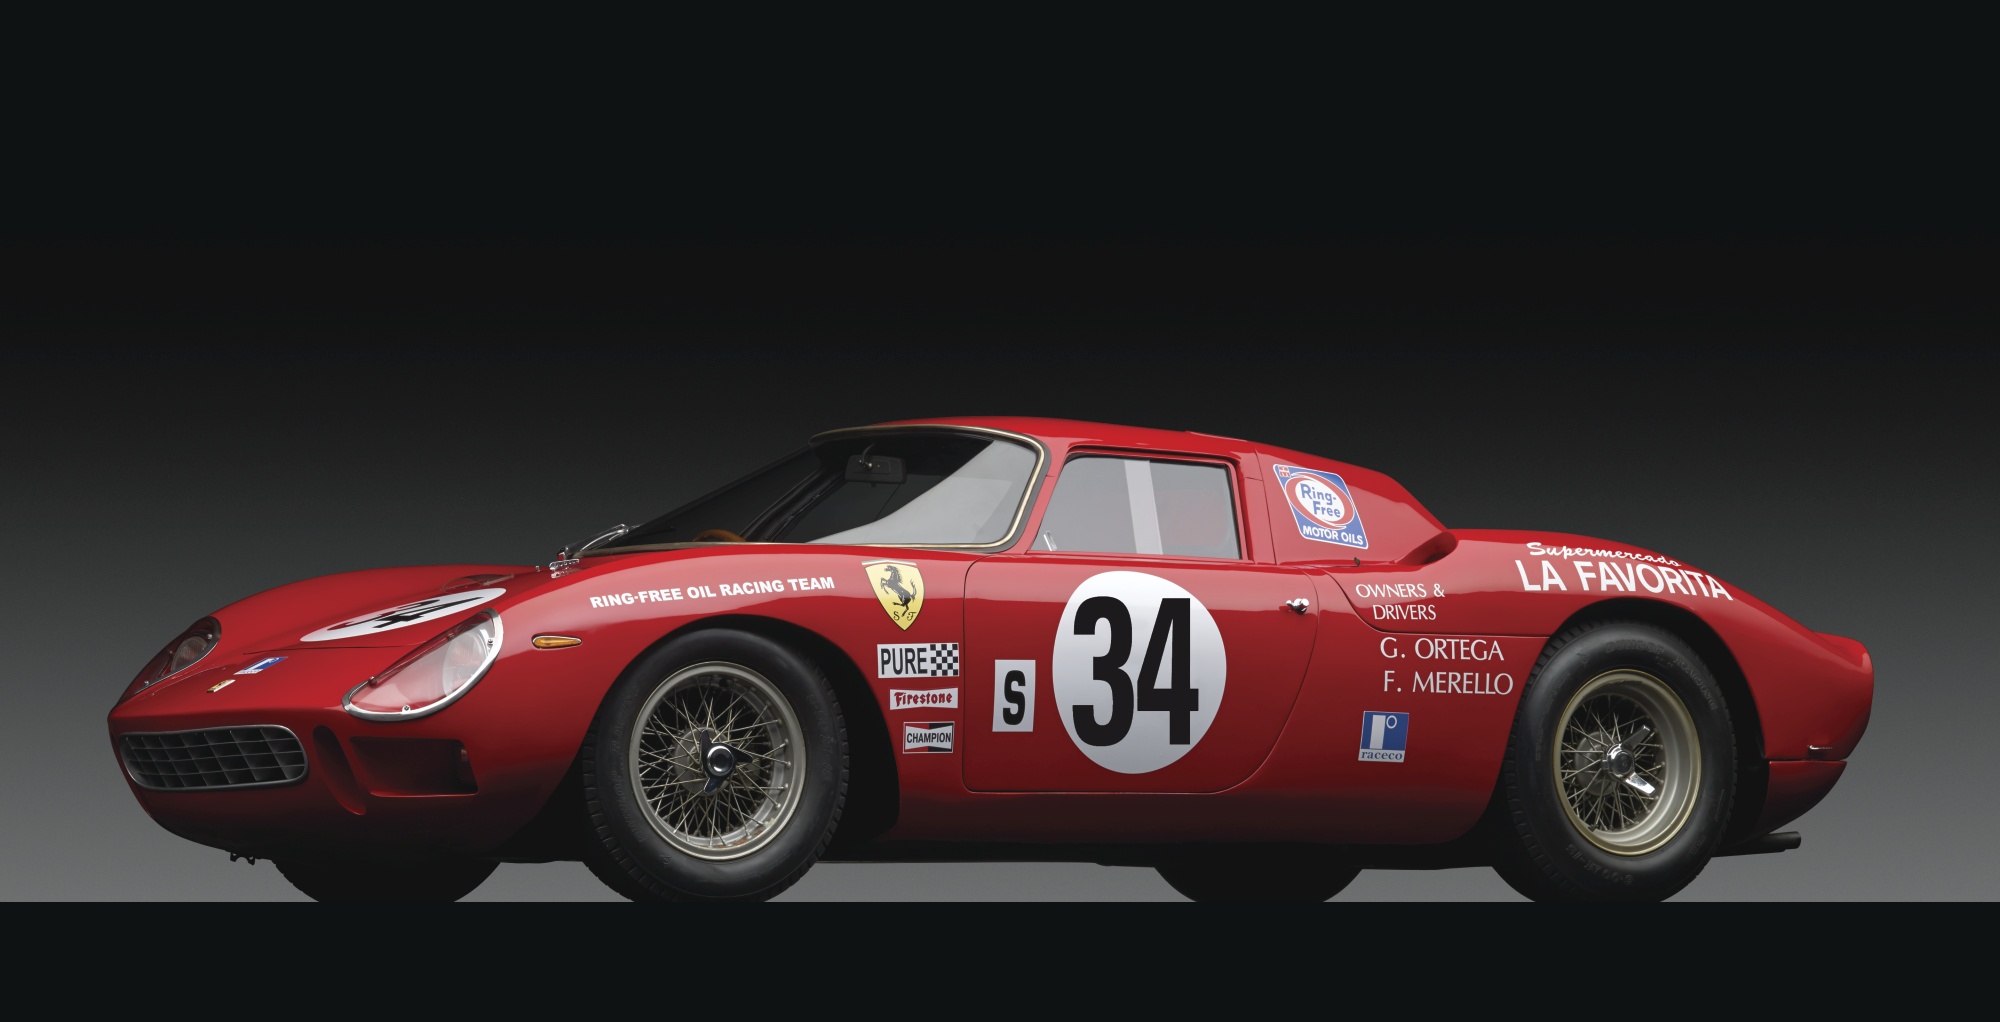 1964 Ferrari 250 LM - $12 million to $15 million 